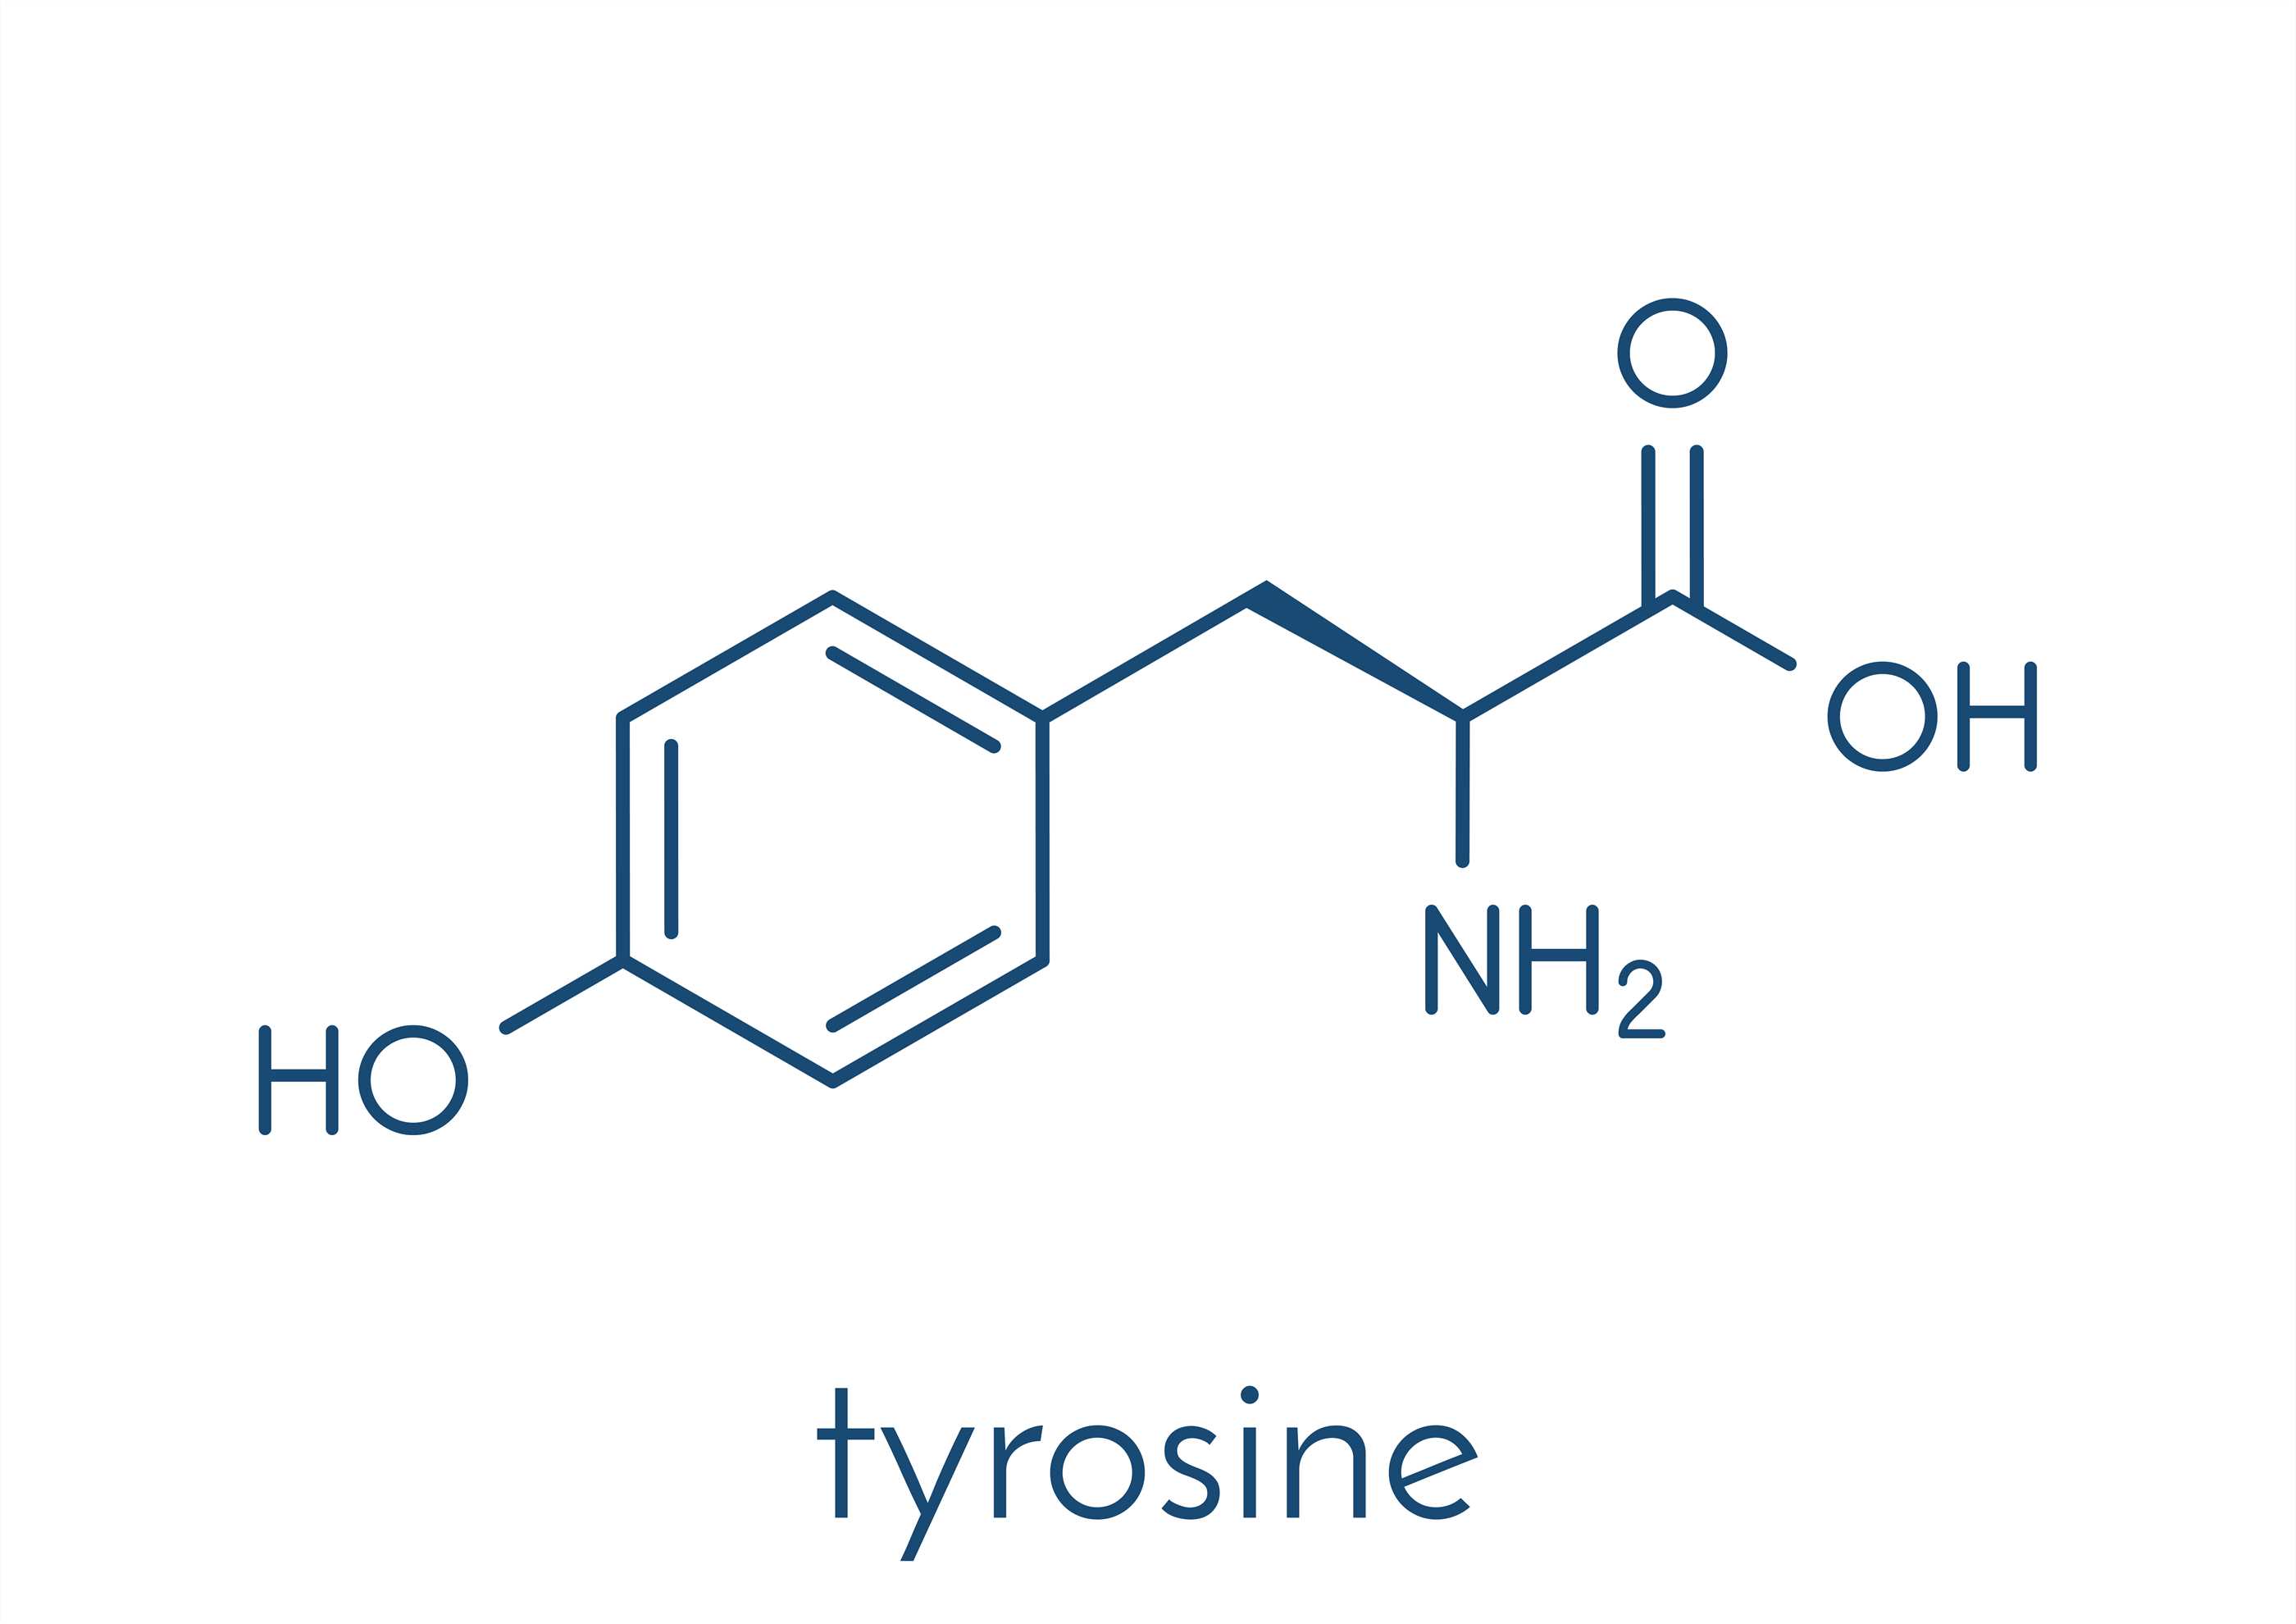 Tyrosine Nitration-Specific Antibody Introduction